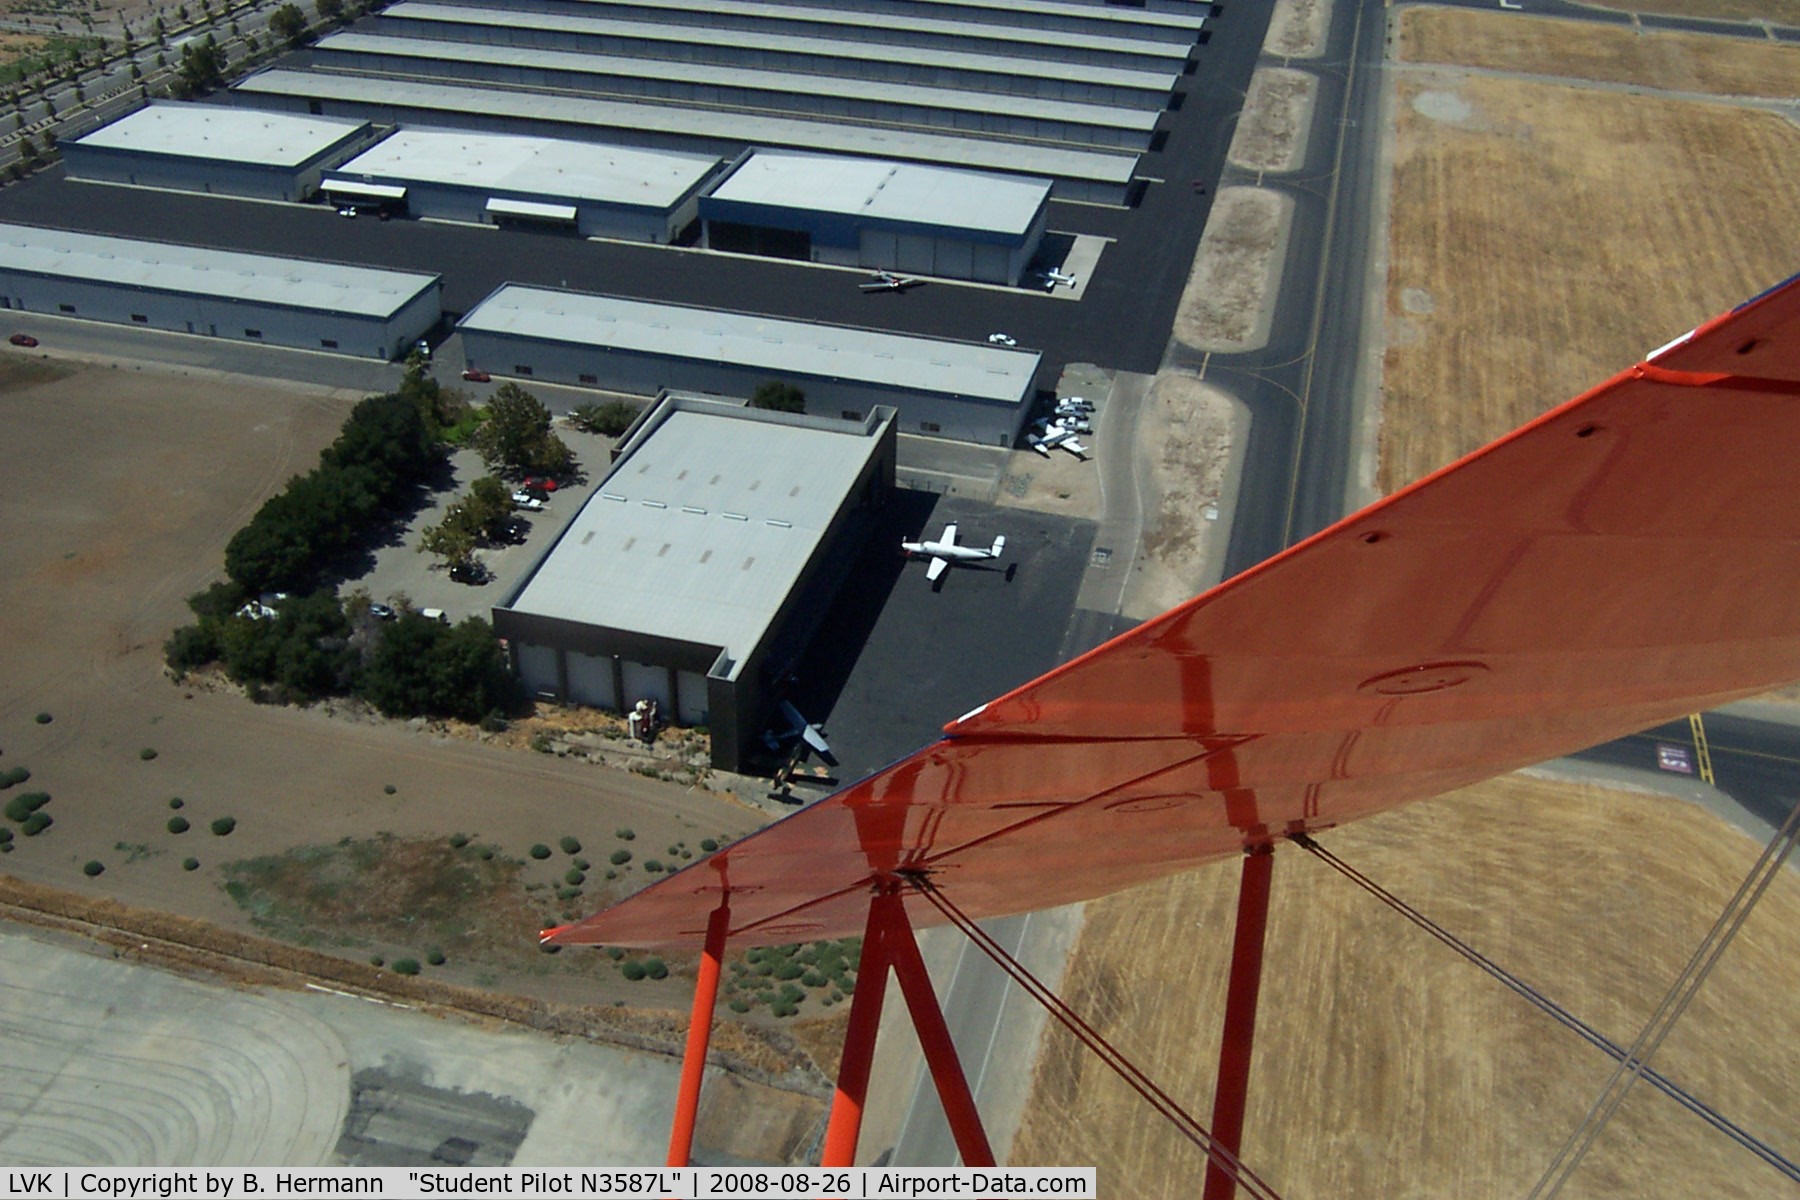 Livermore Municipal Airport (LVK) - Attitude Aviation ramp as seen from their 